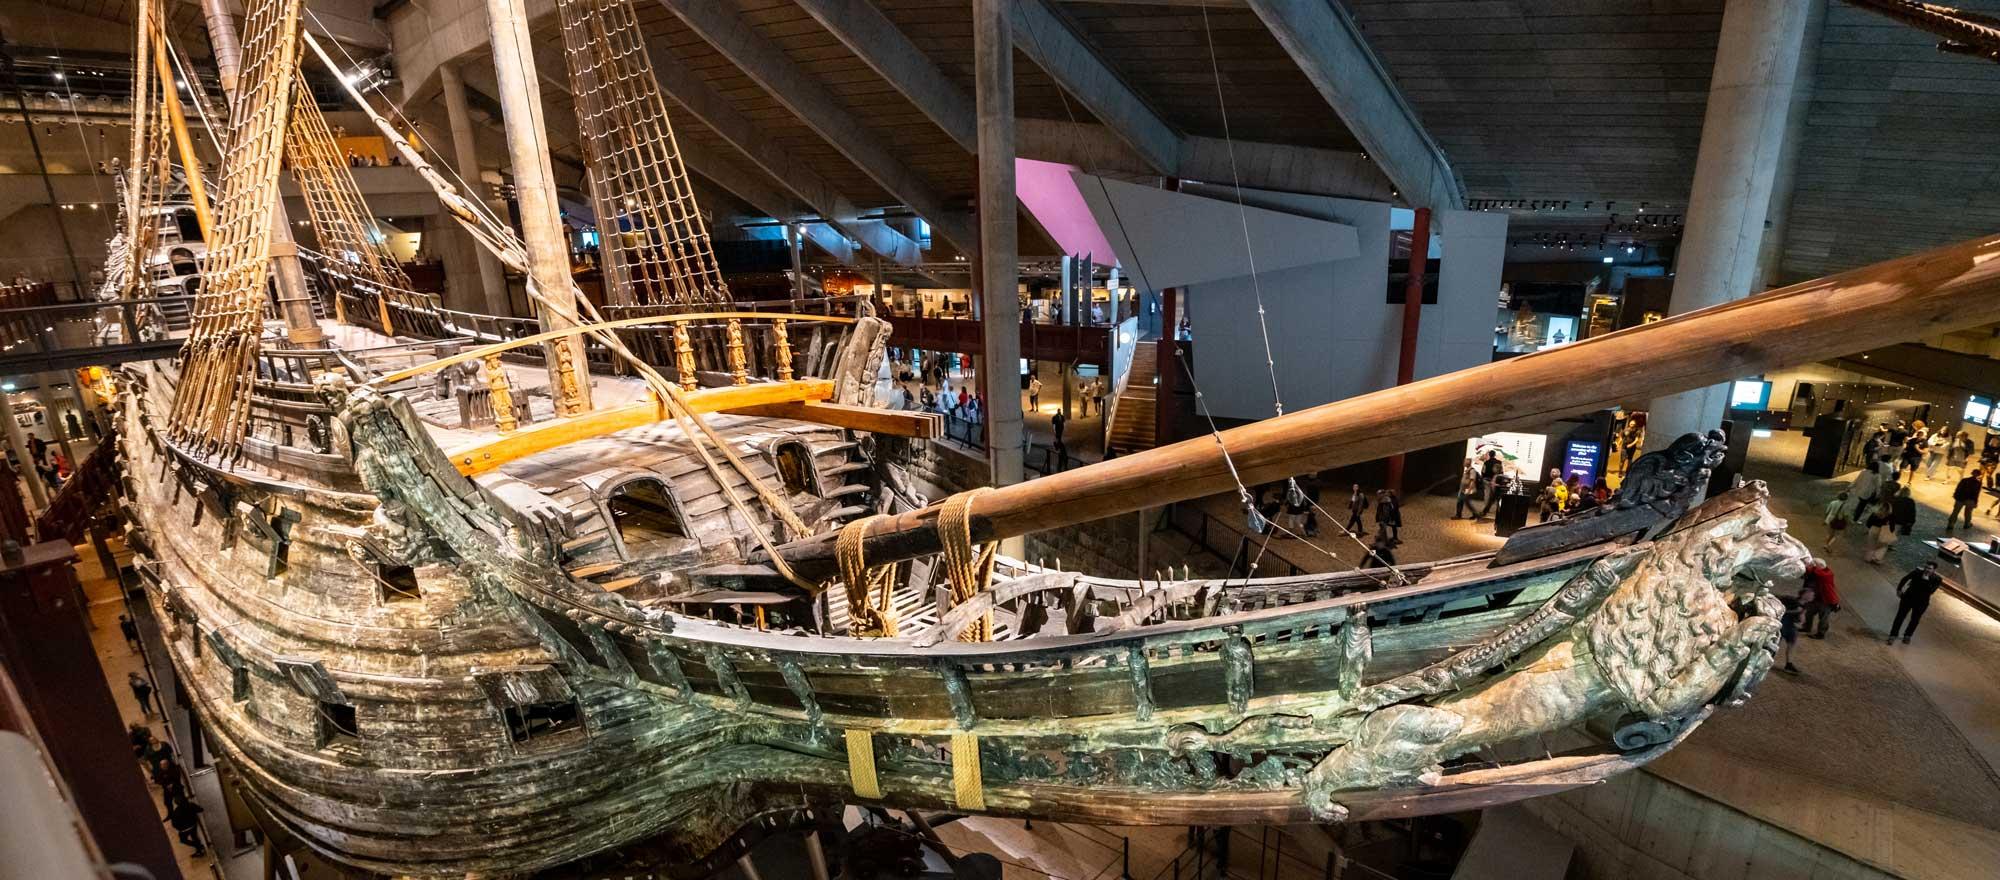 Vasa - old Swedish warship in Stockholm. Photo: Adobe Stock